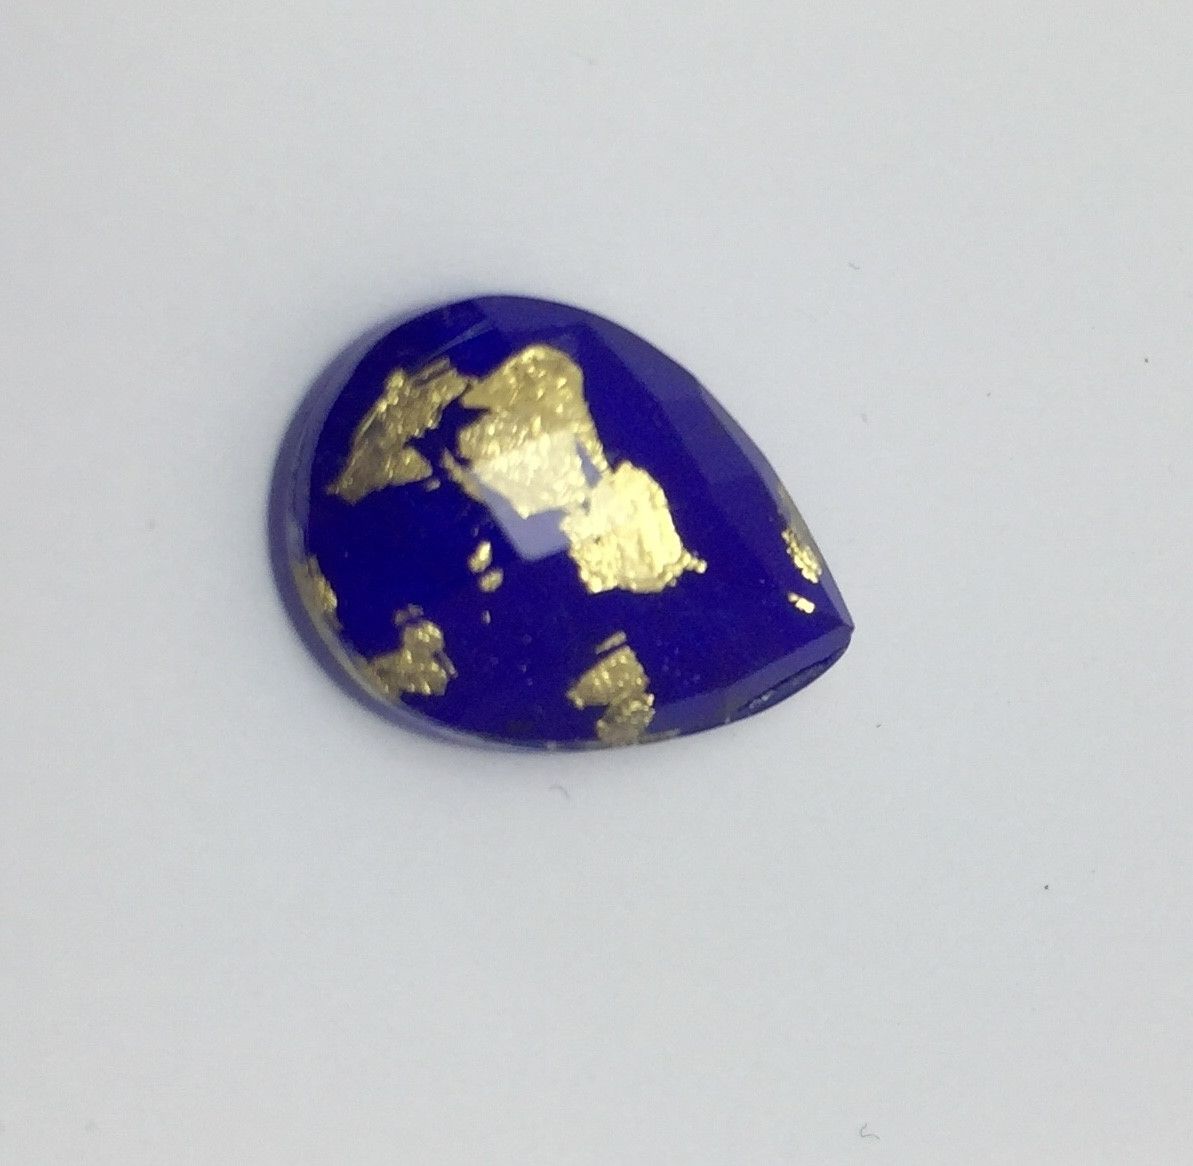 Fake lapis lazuli/rutilated quartz doublet